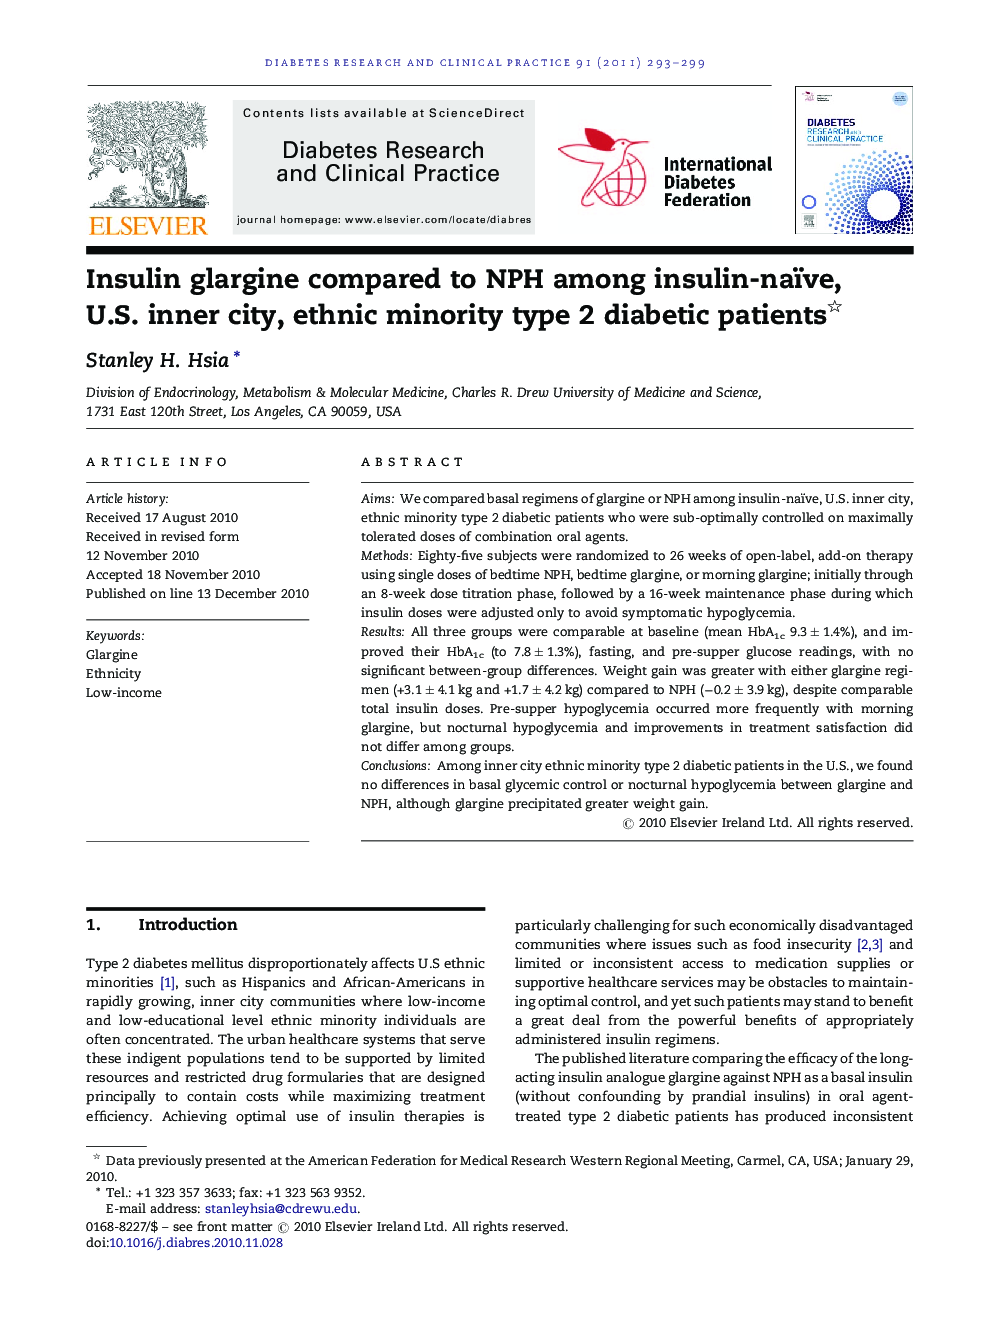 Insulin glargine compared to NPH among insulin-naïve, U.S. inner city, ethnic minority type 2 diabetic patients